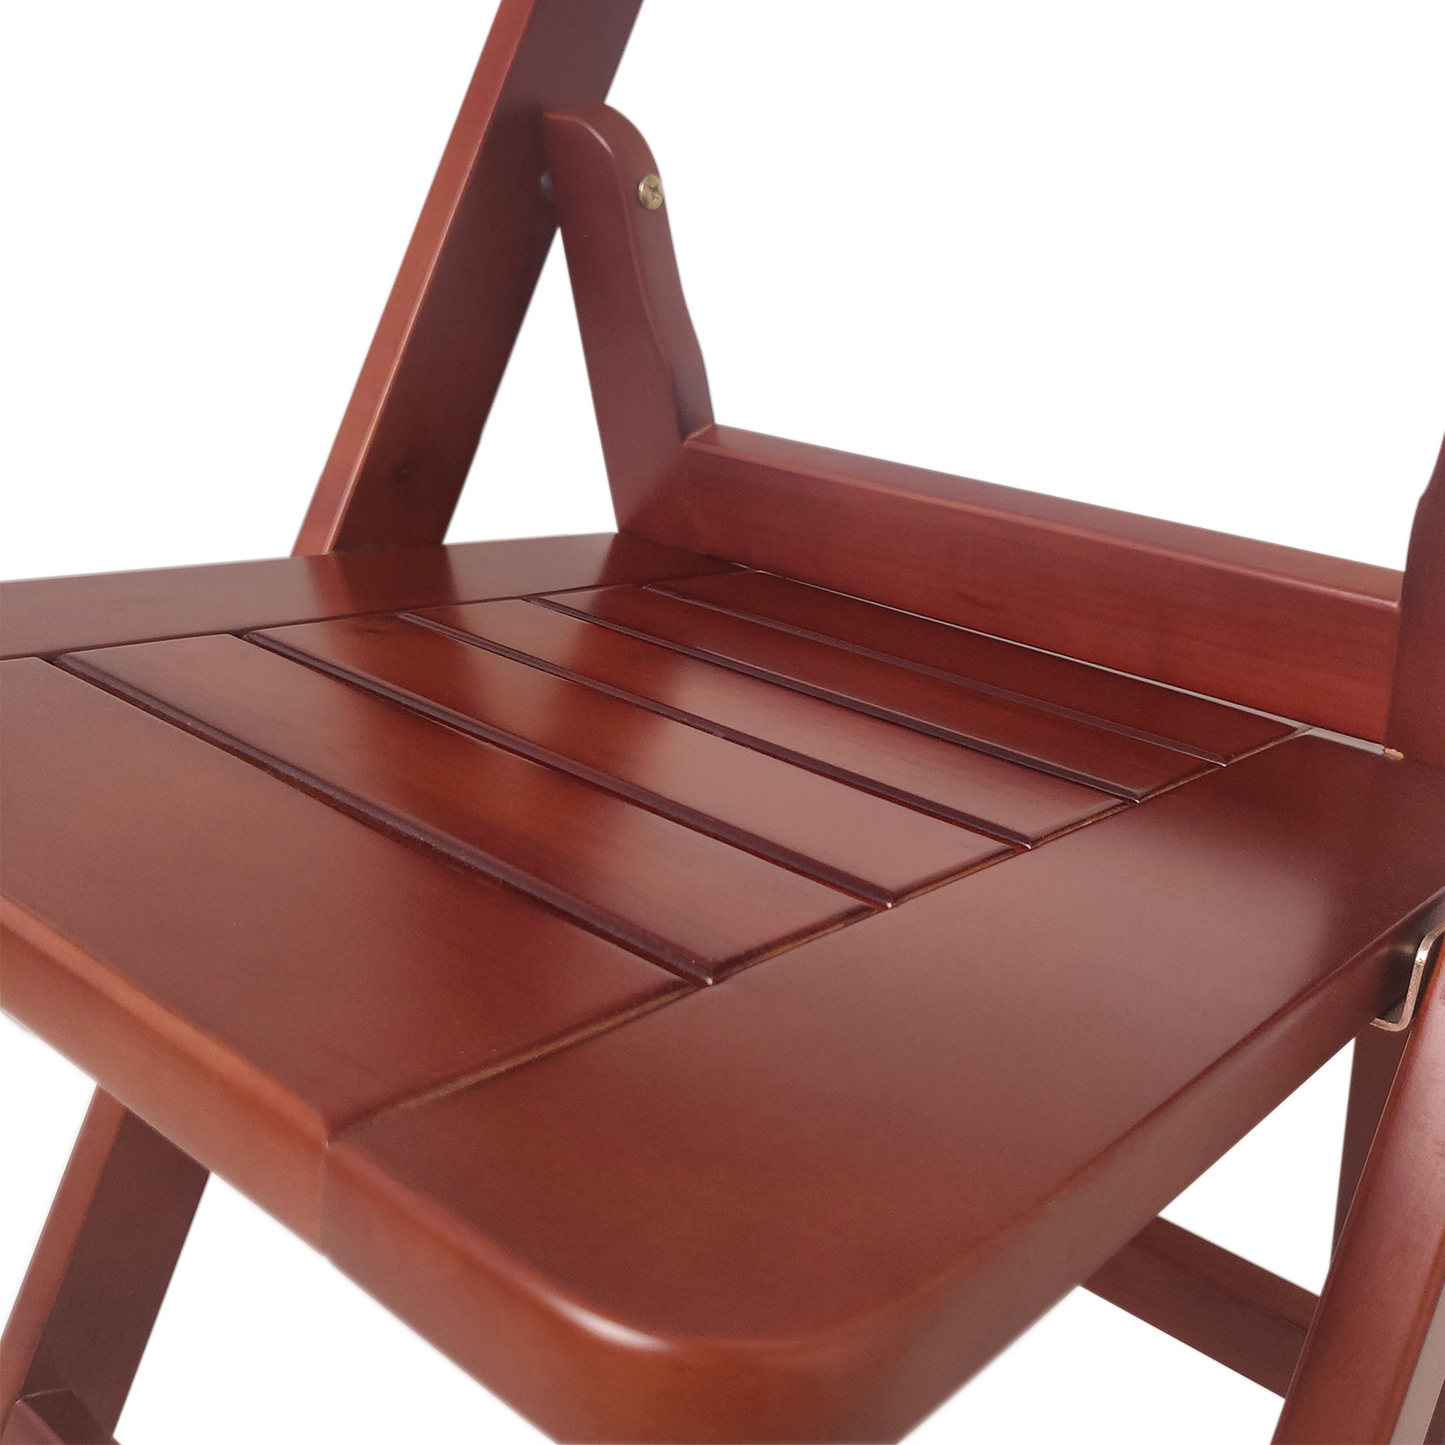 Comfort Leisure Wood Folding Chair(Set of 2),Walnut, 18.1\"x24.8\"x29.5\"